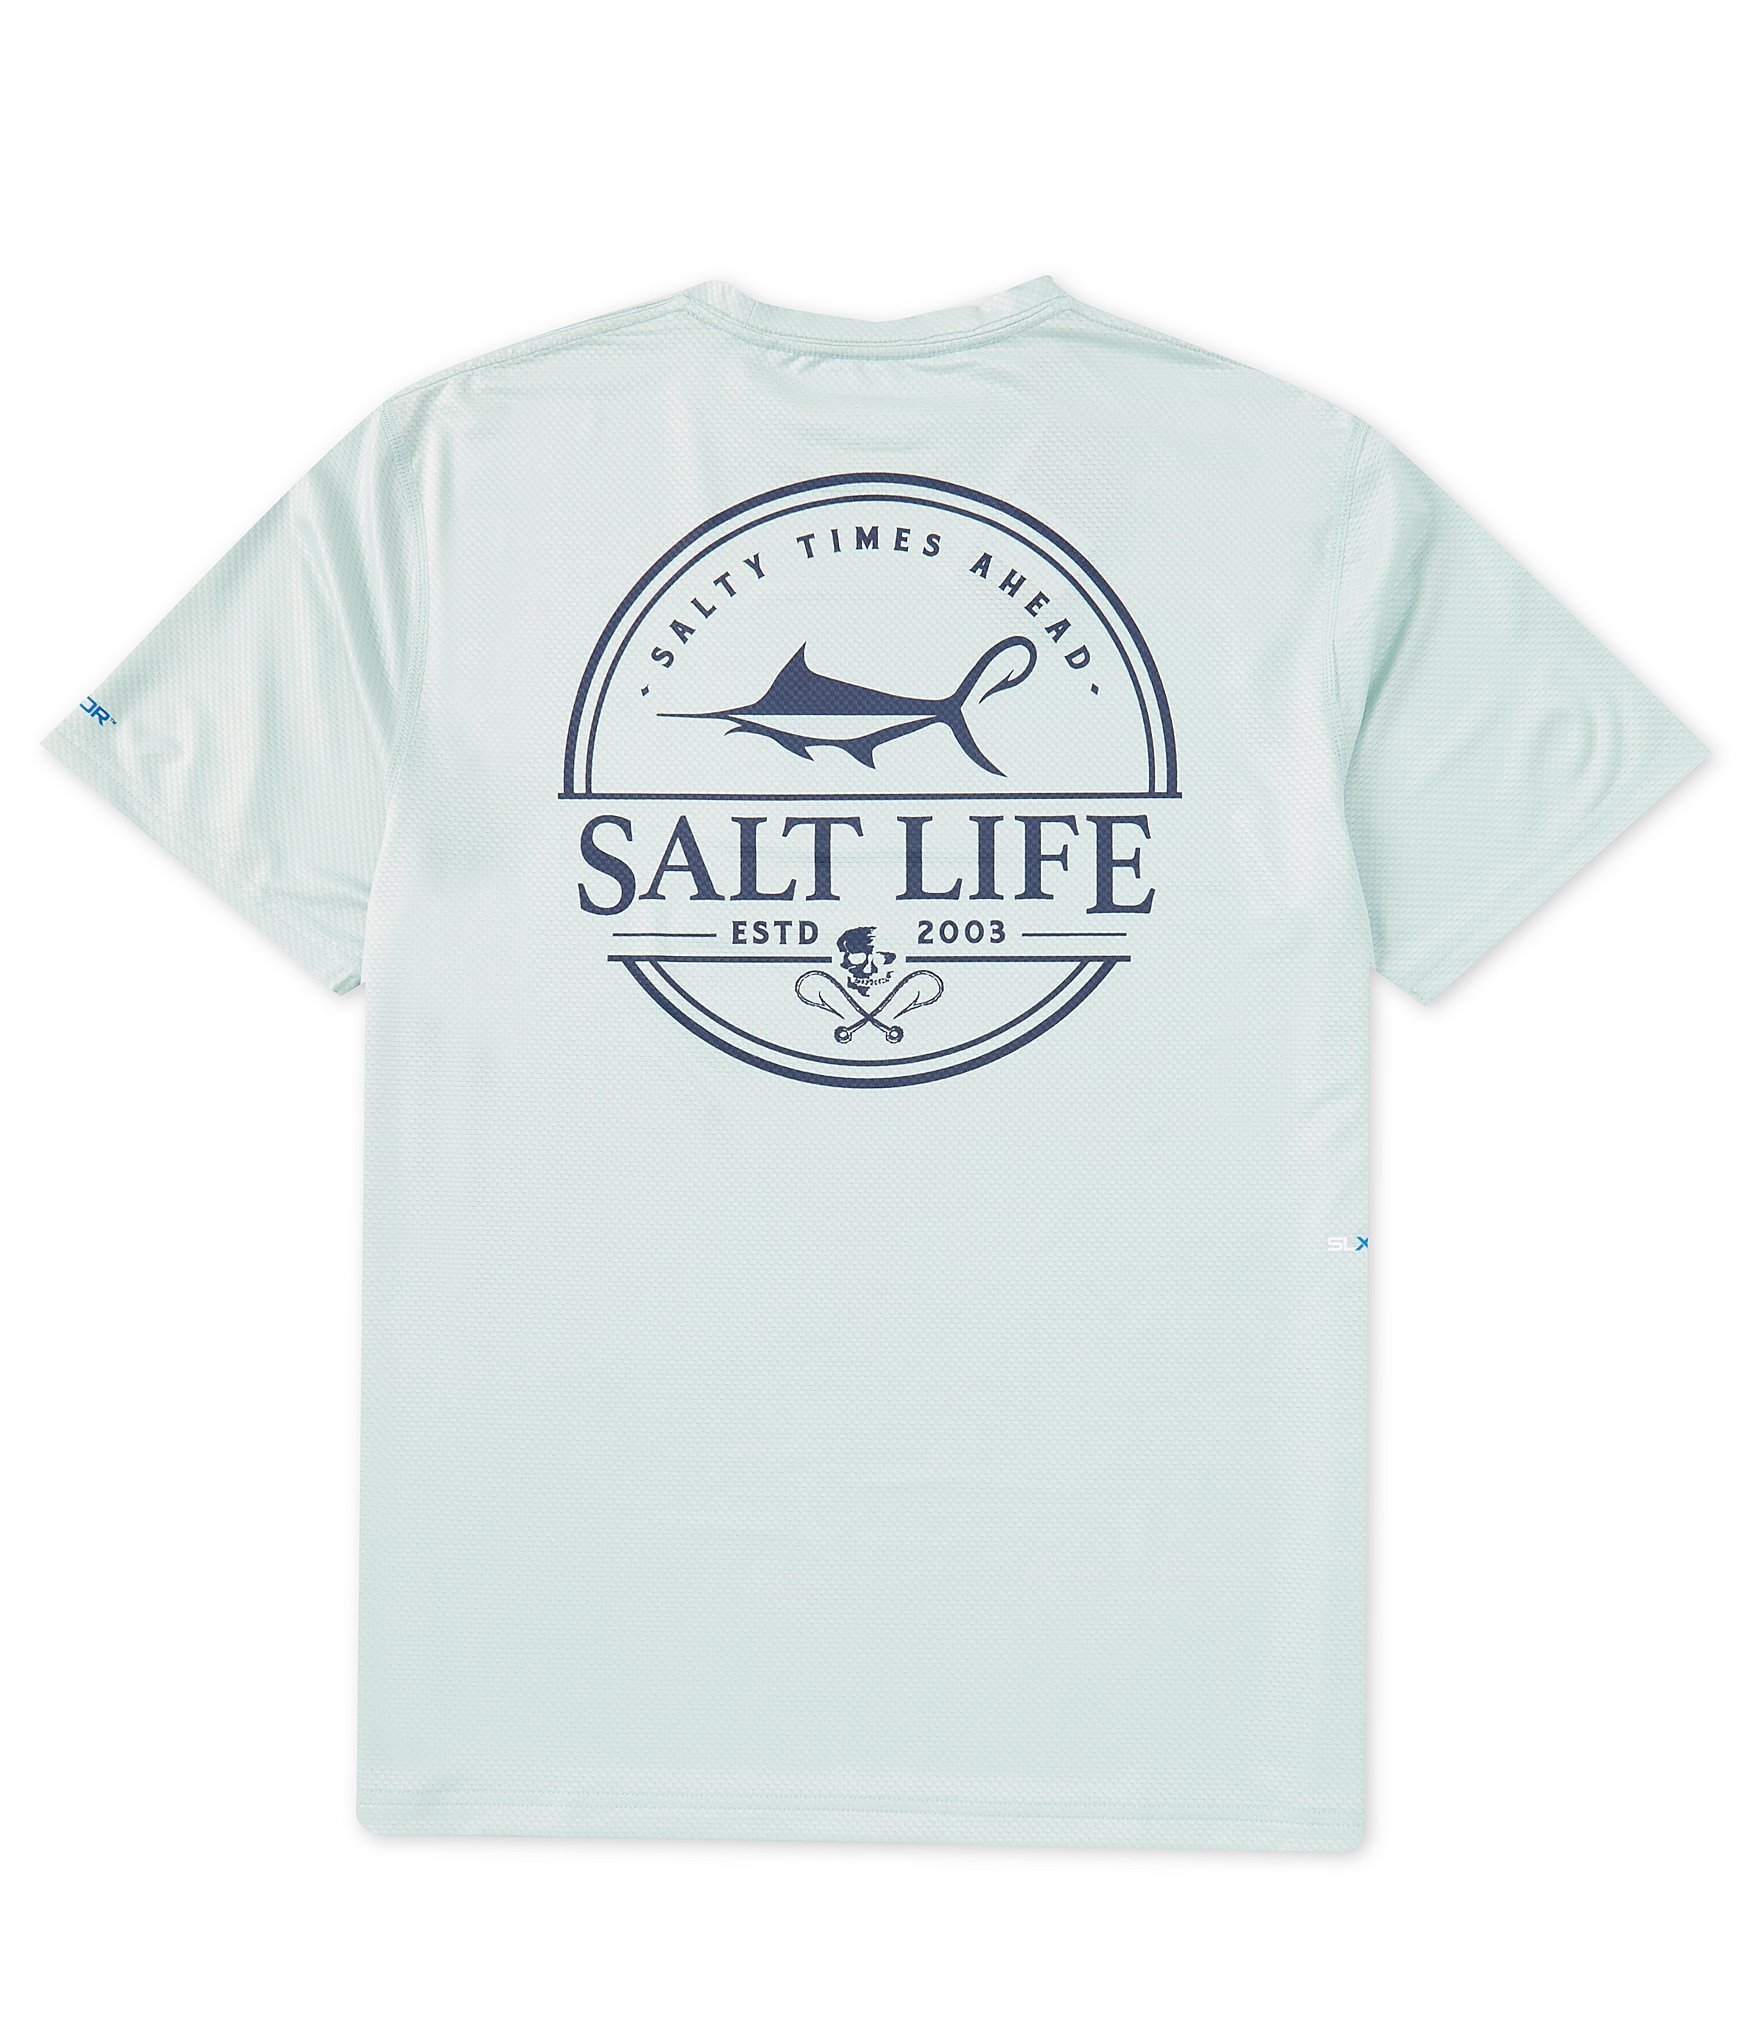 Salt Life Men's Salty Times Ahead Performance Logo Graphic Long